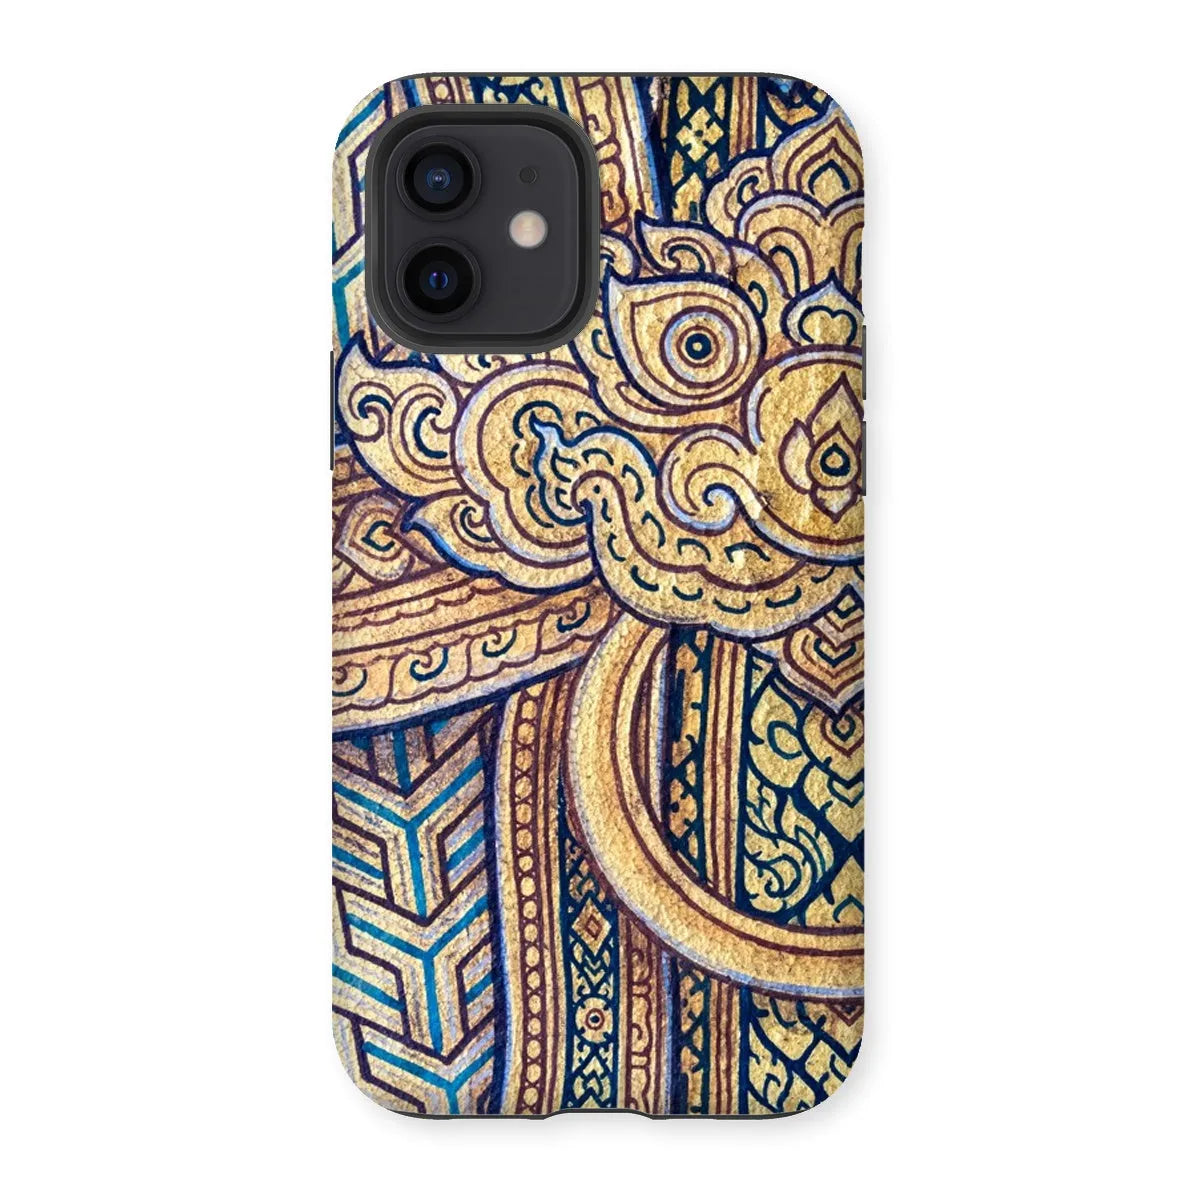 Man’s Best Friend - Thai Aesthetic Art Phone Case - Iphone 12 / Matte - Mobile Phone Cases - Aesthetic Art